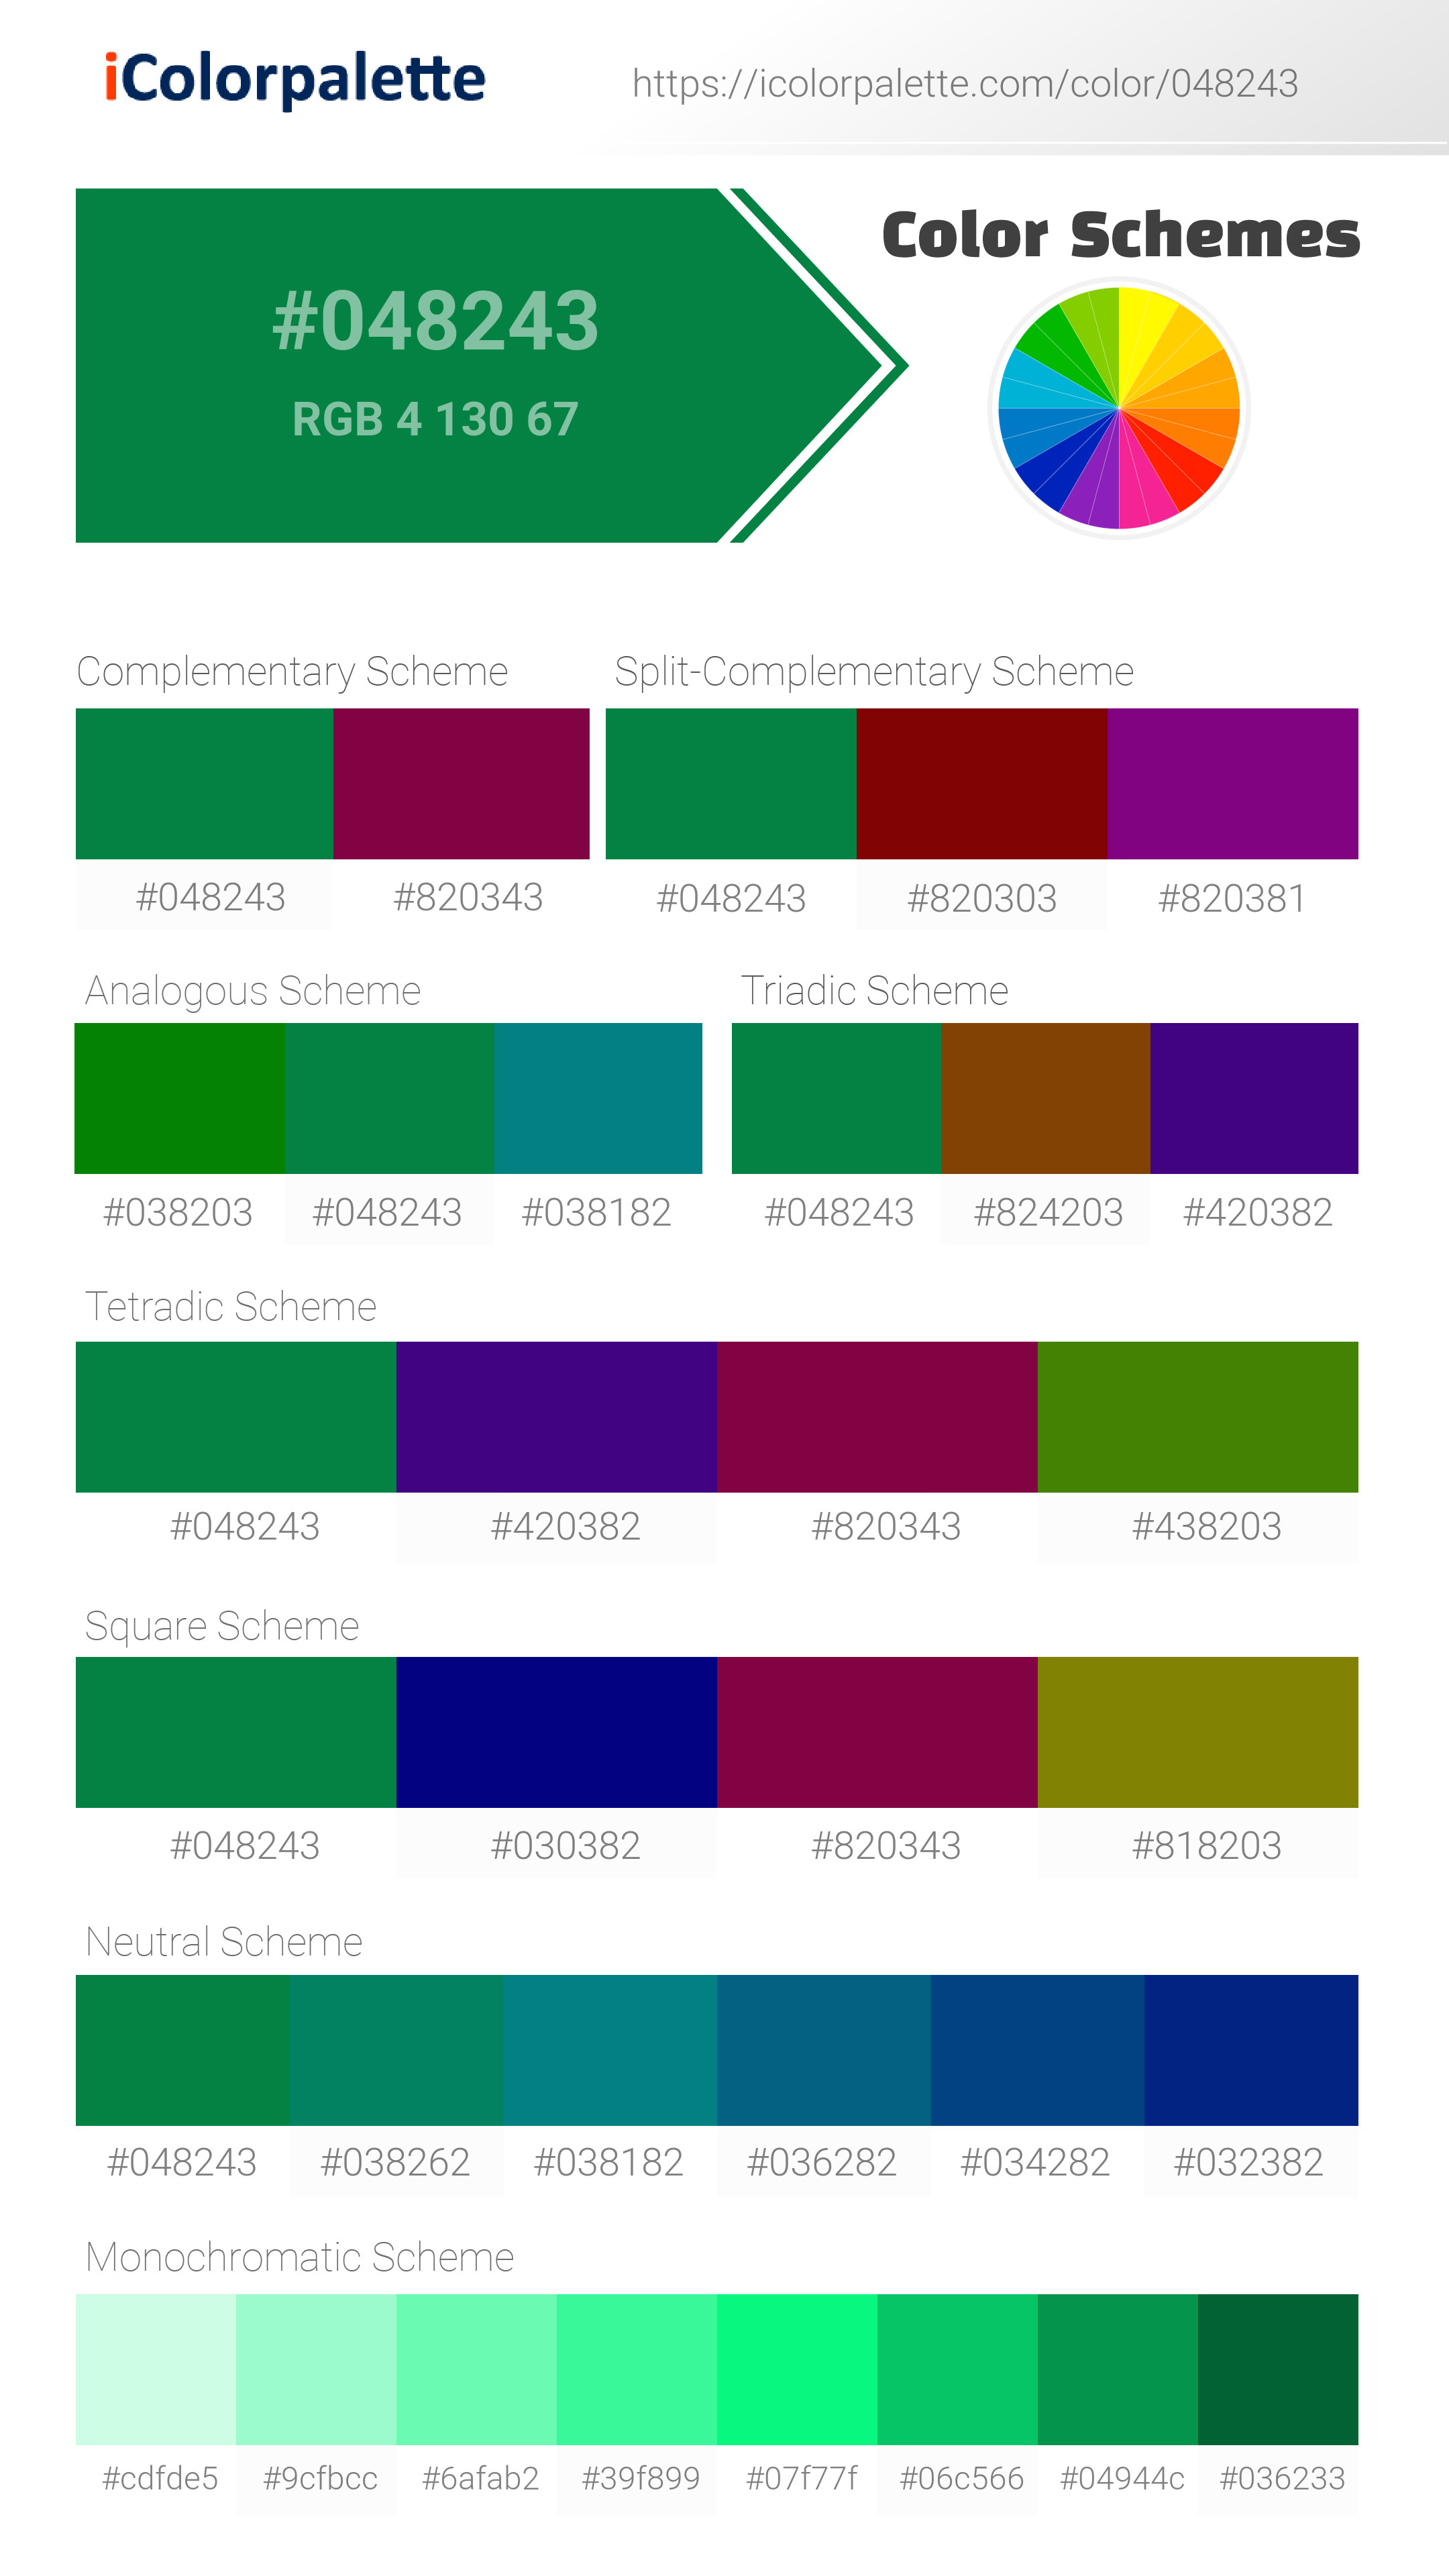 https://www.icolorpalette.com/download/schemes/048243_colorschemes_icolorpalette.jpg